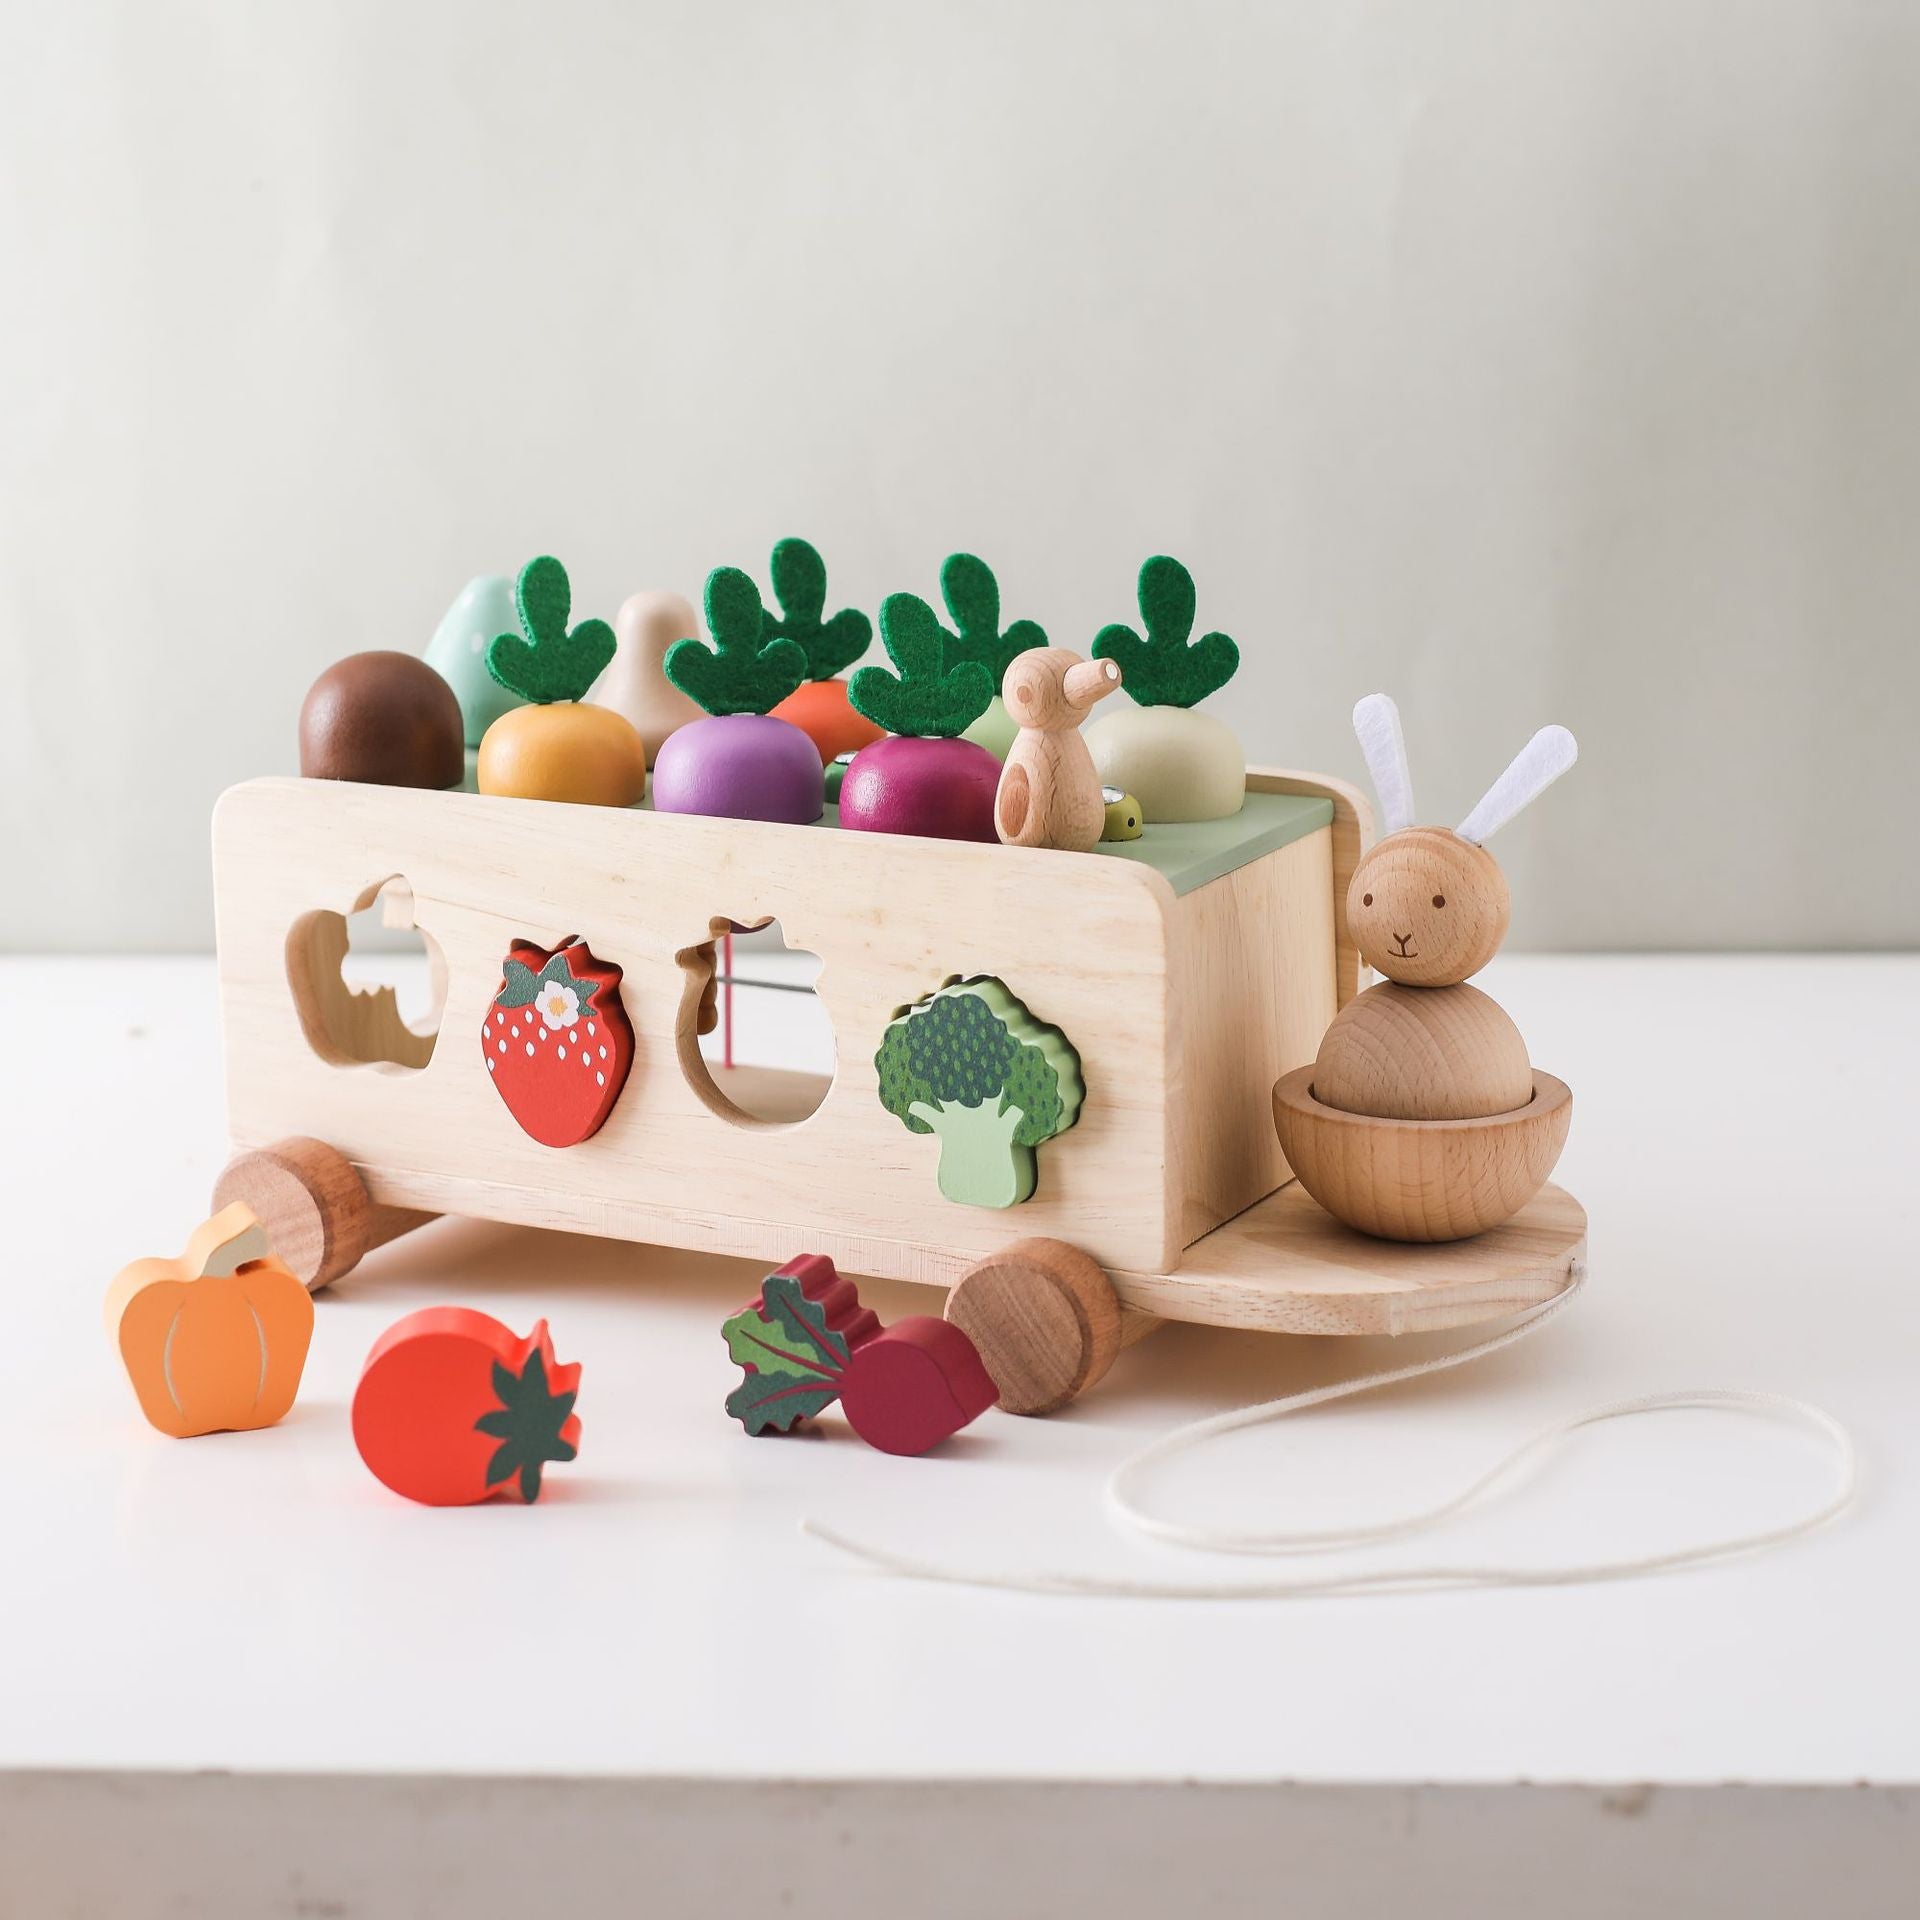 Montessori inspired wooden multi activity farm cart